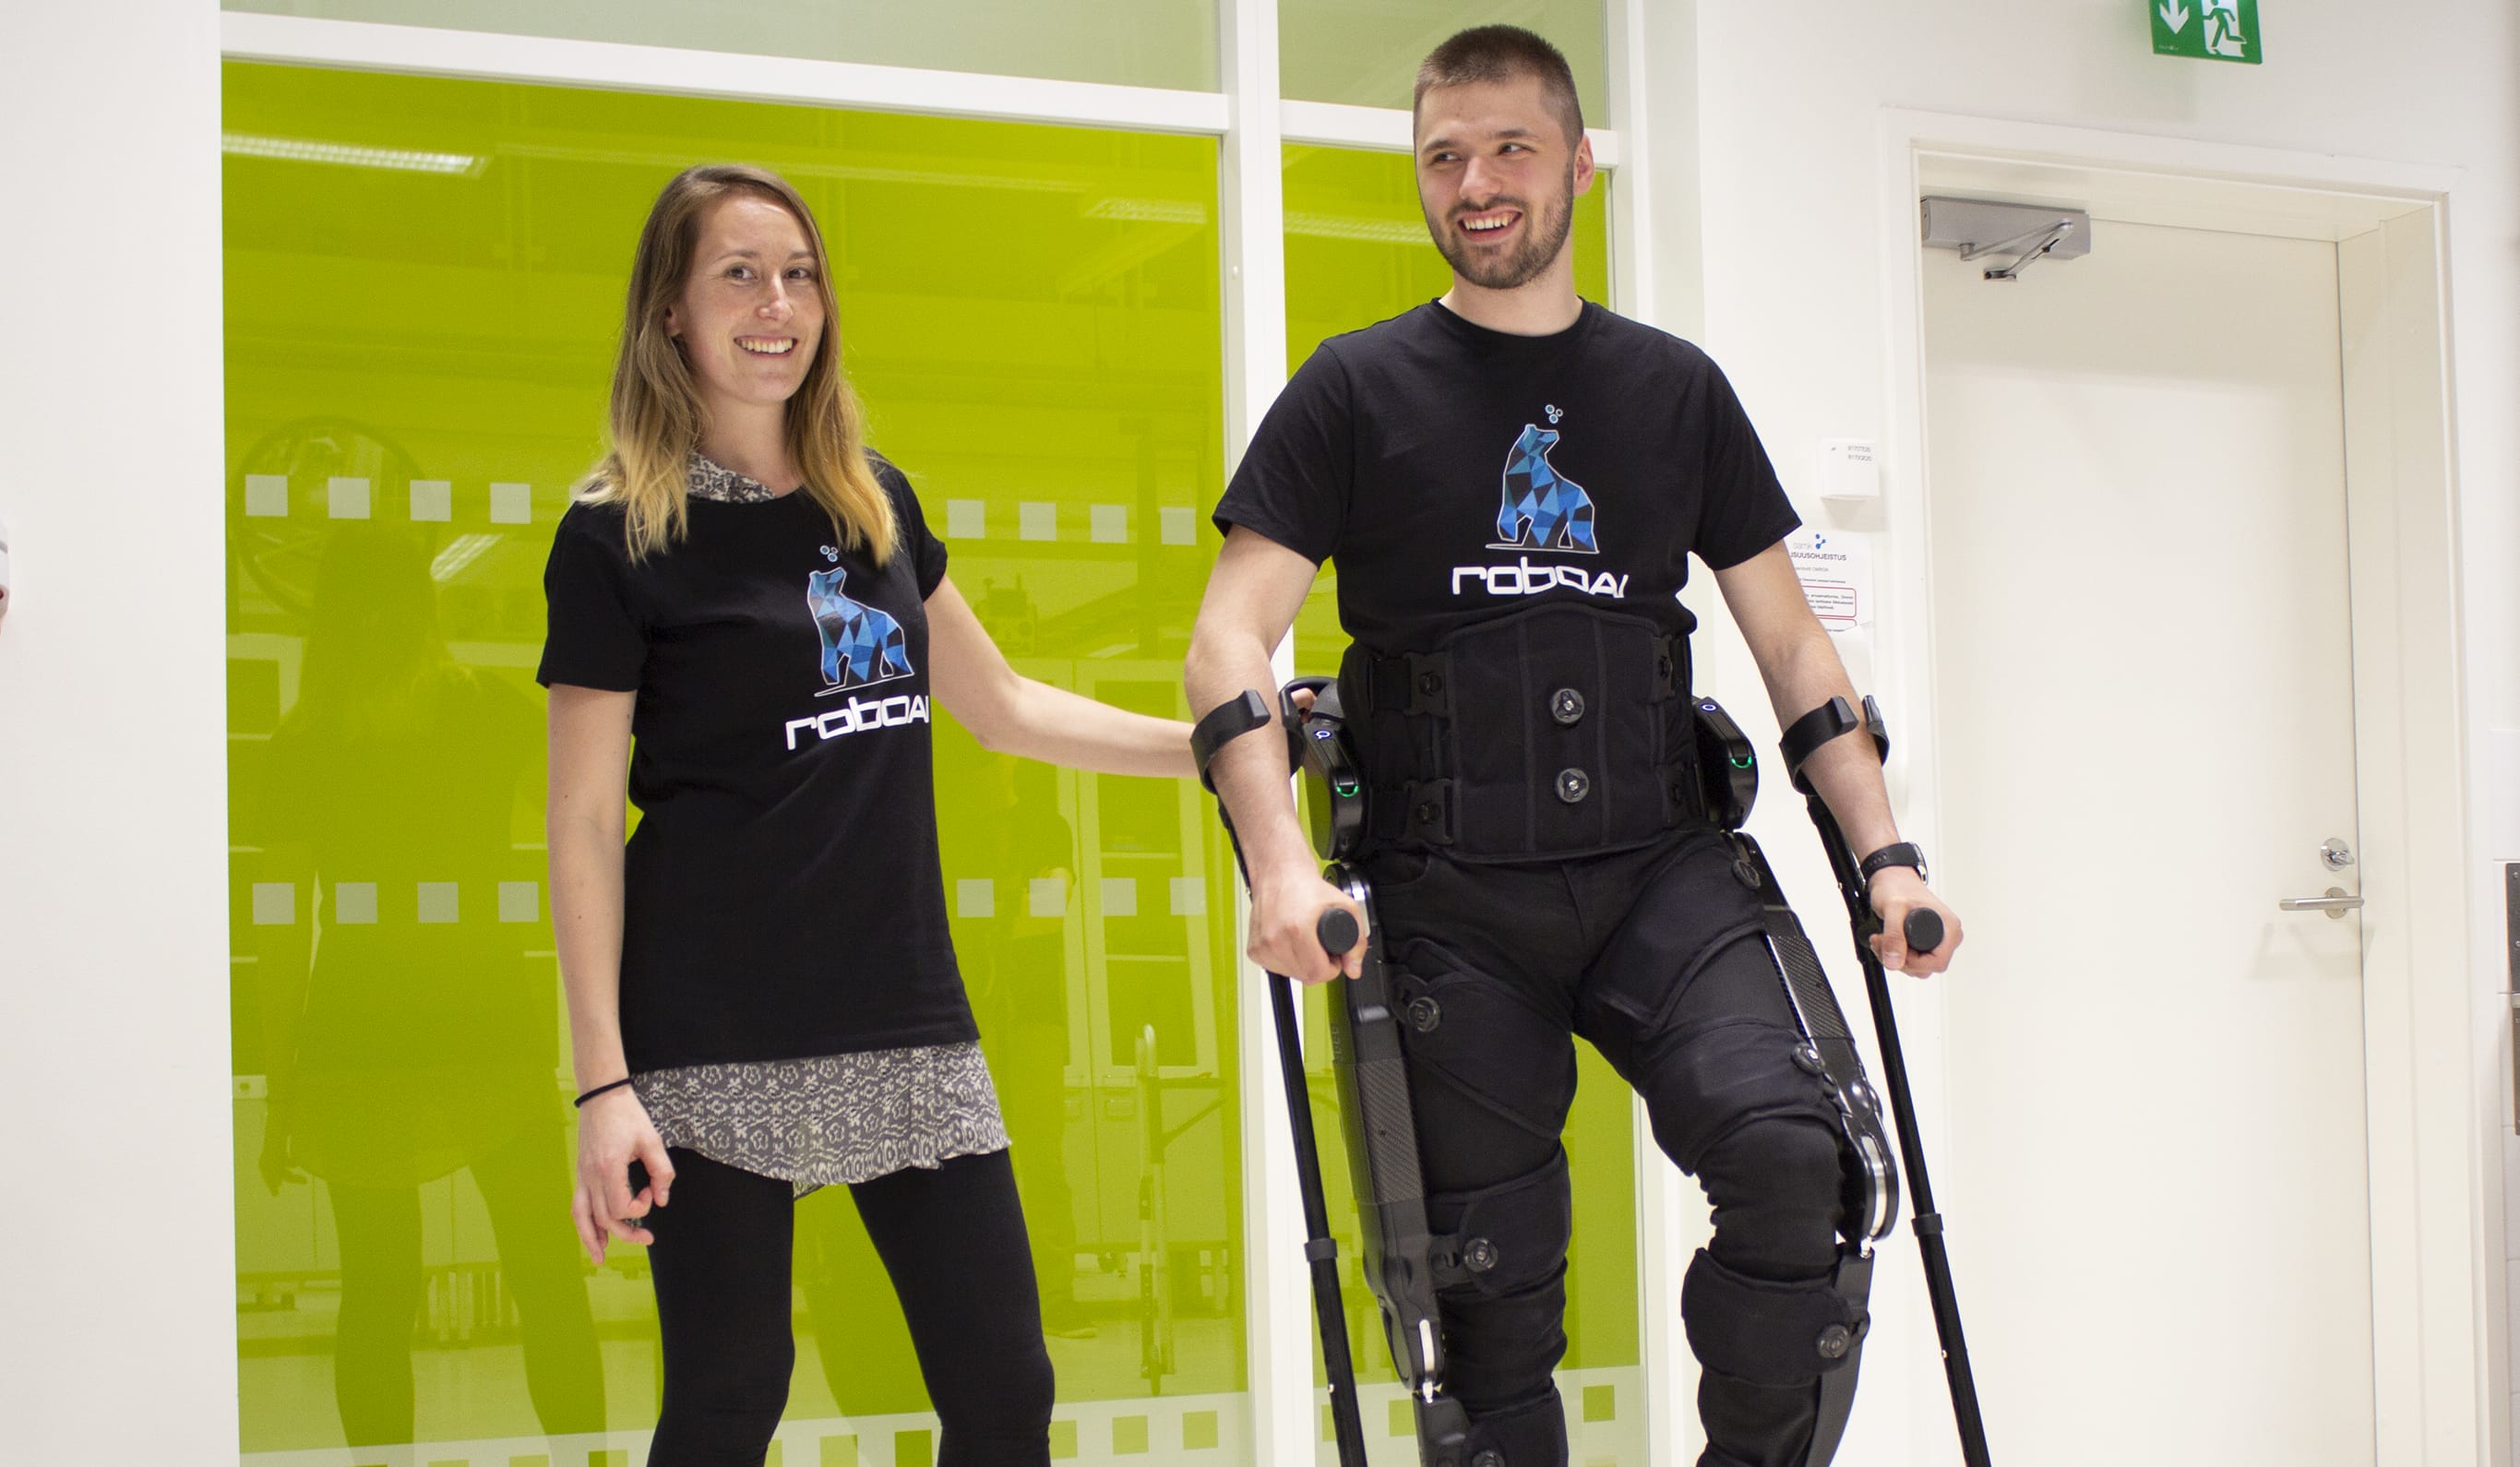 A woman guides a man wearing an exoskeleton rehabilitation robot.